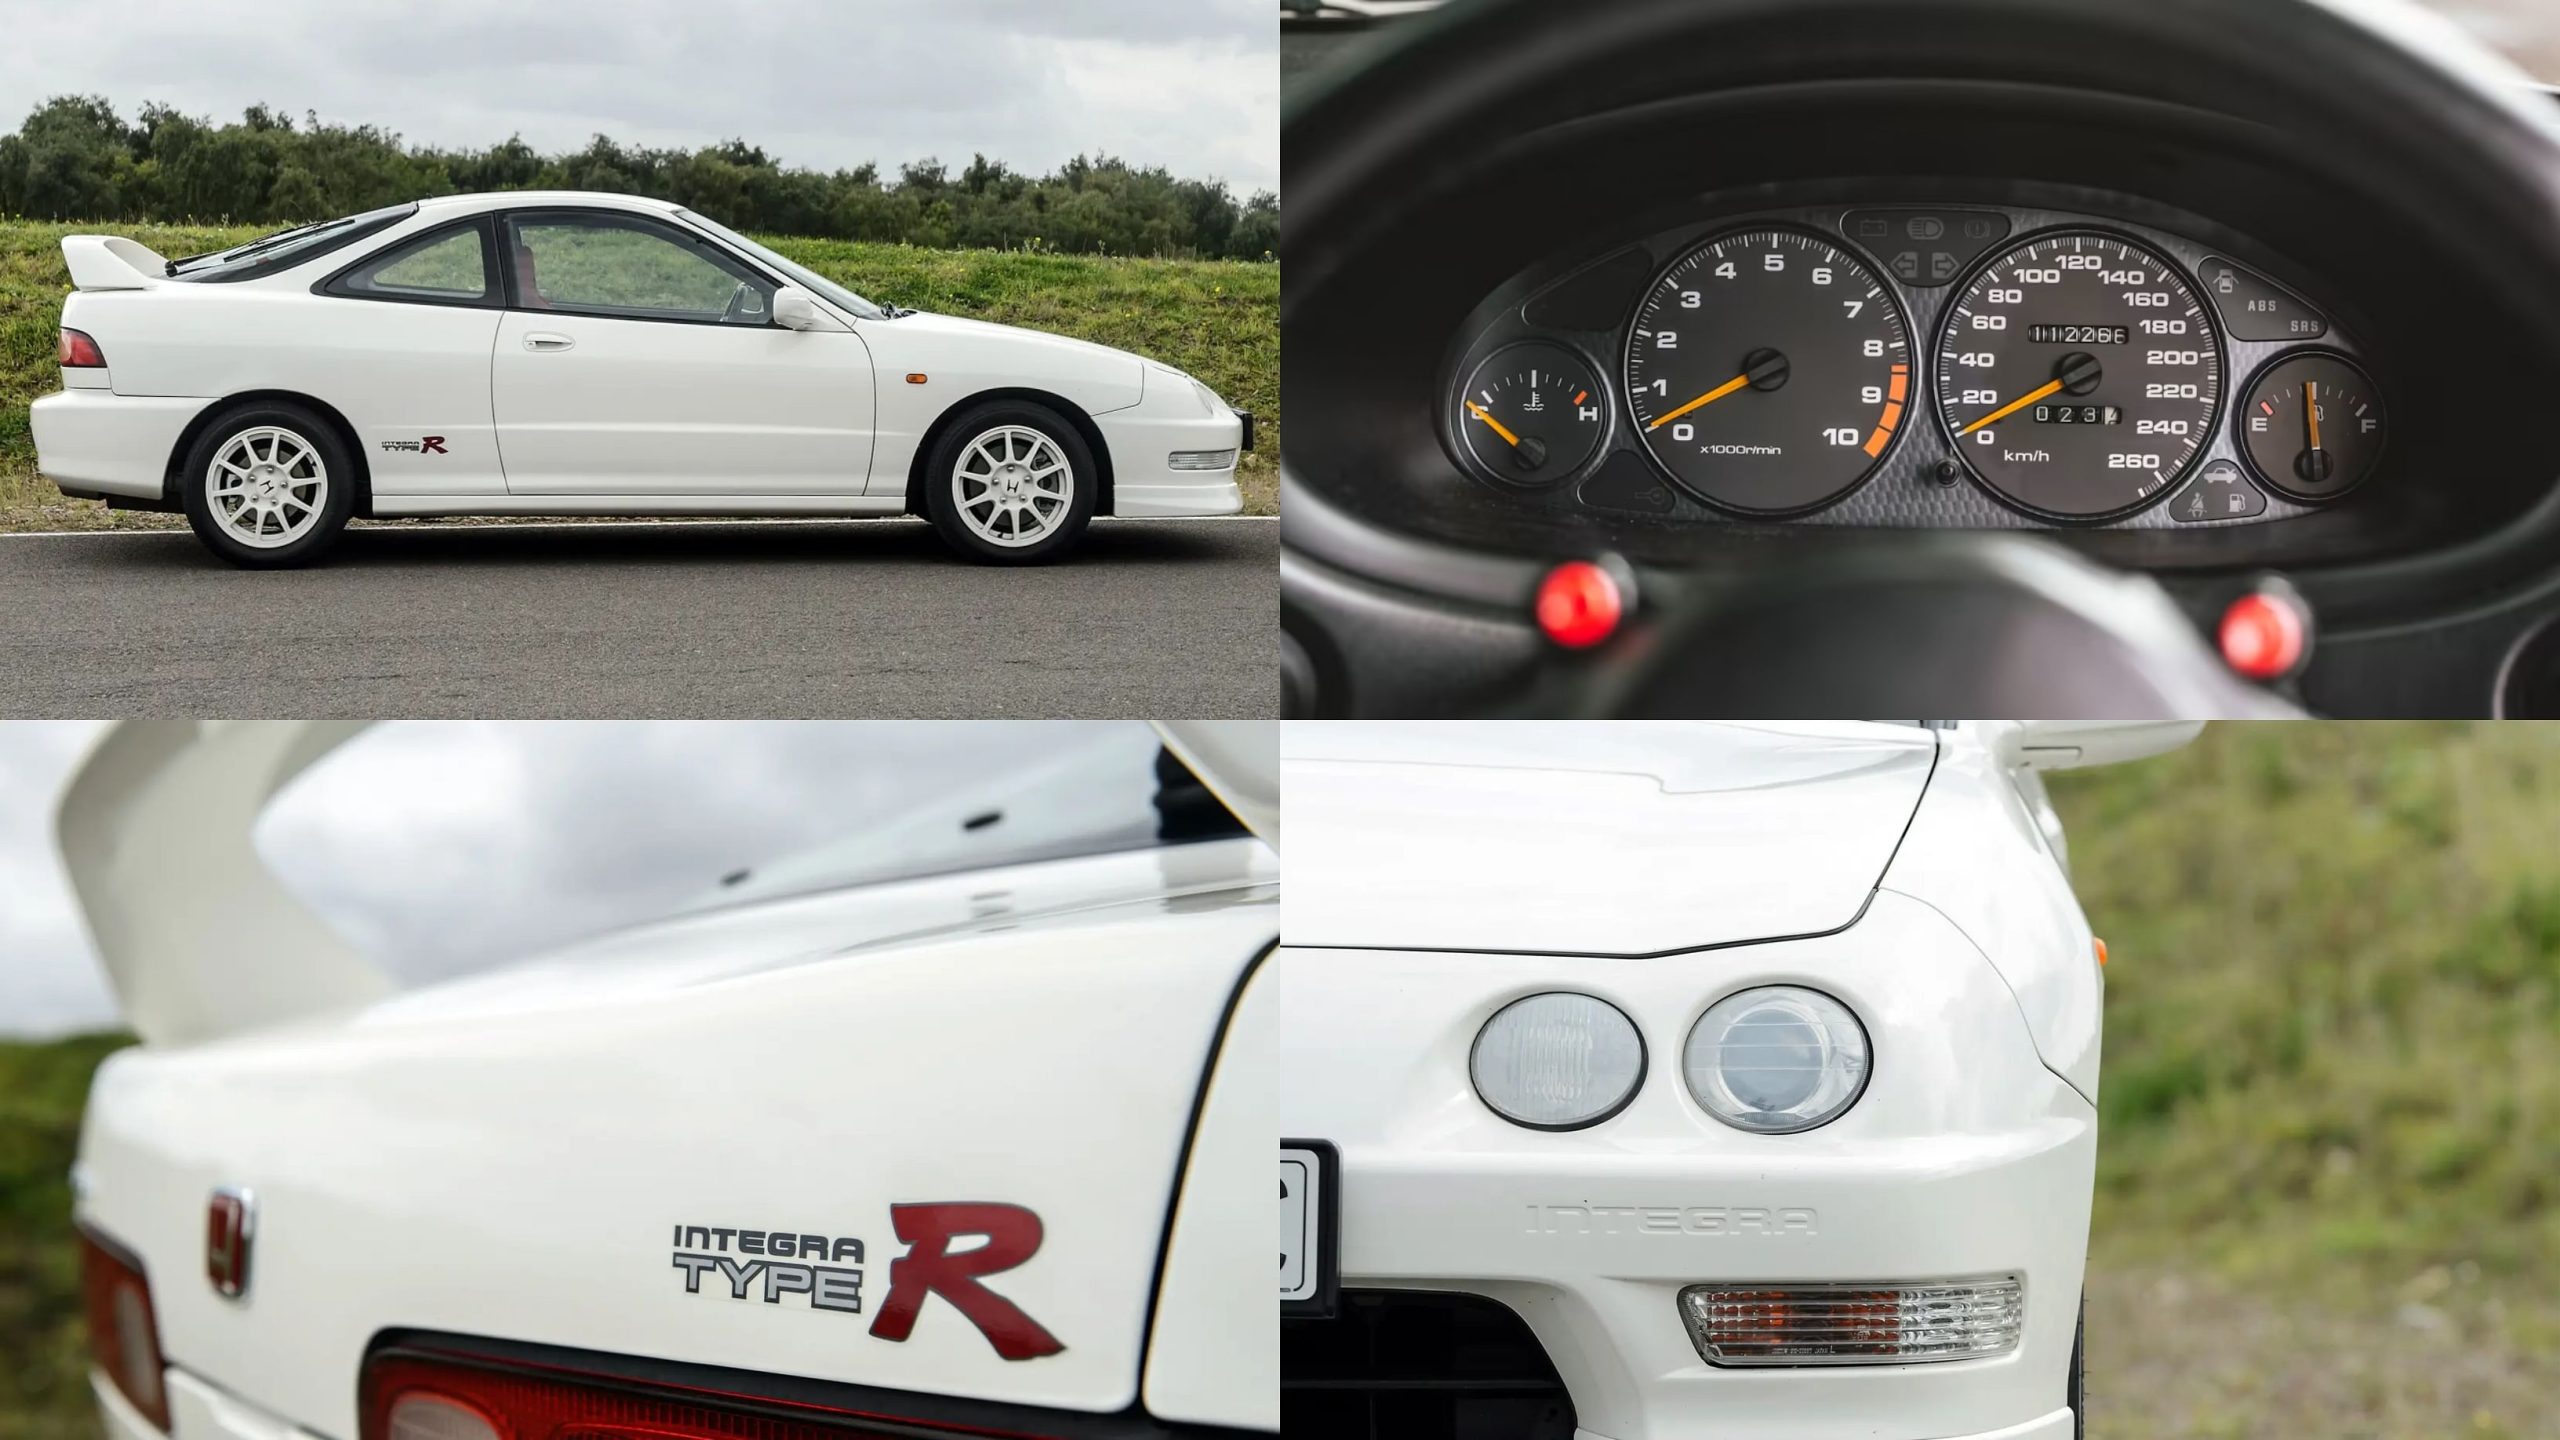 White Honda Integra Type R - side view, headlights, taillights, gauge